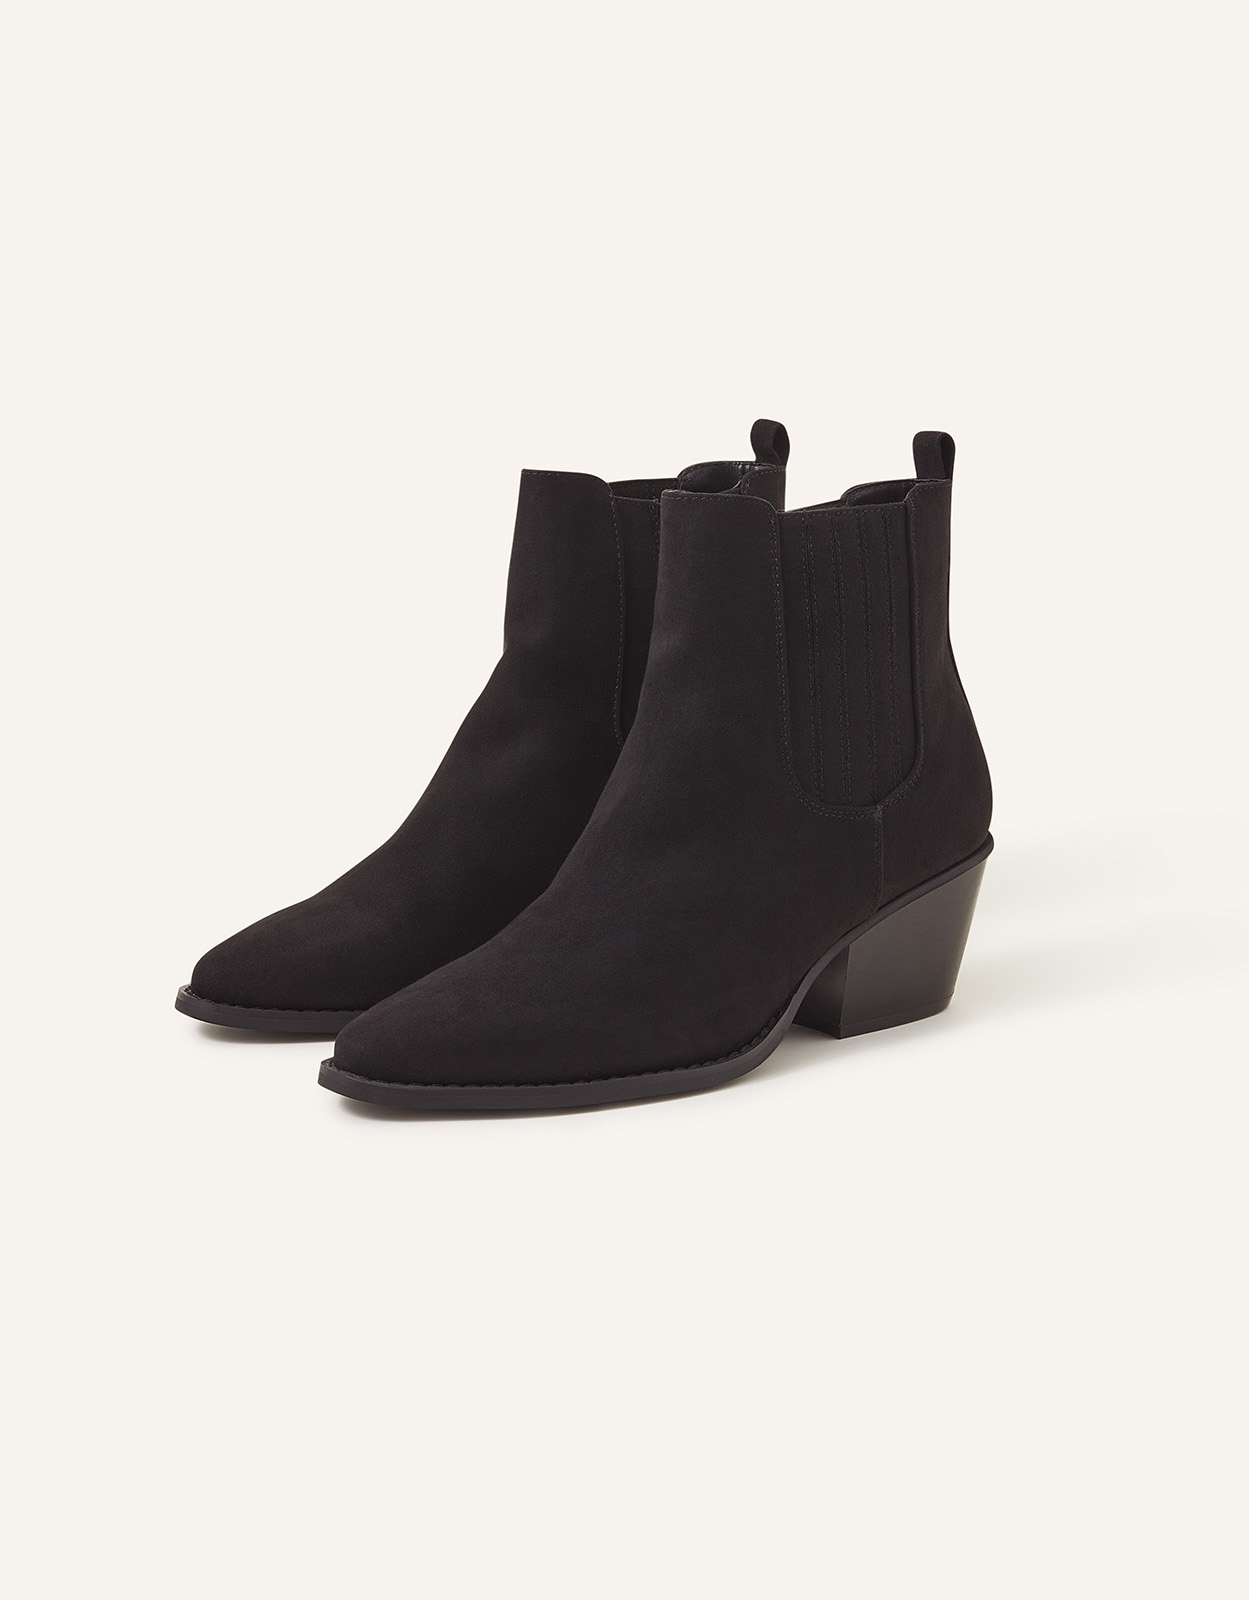 Accessorize Women's Western Boots Black, Size: 40